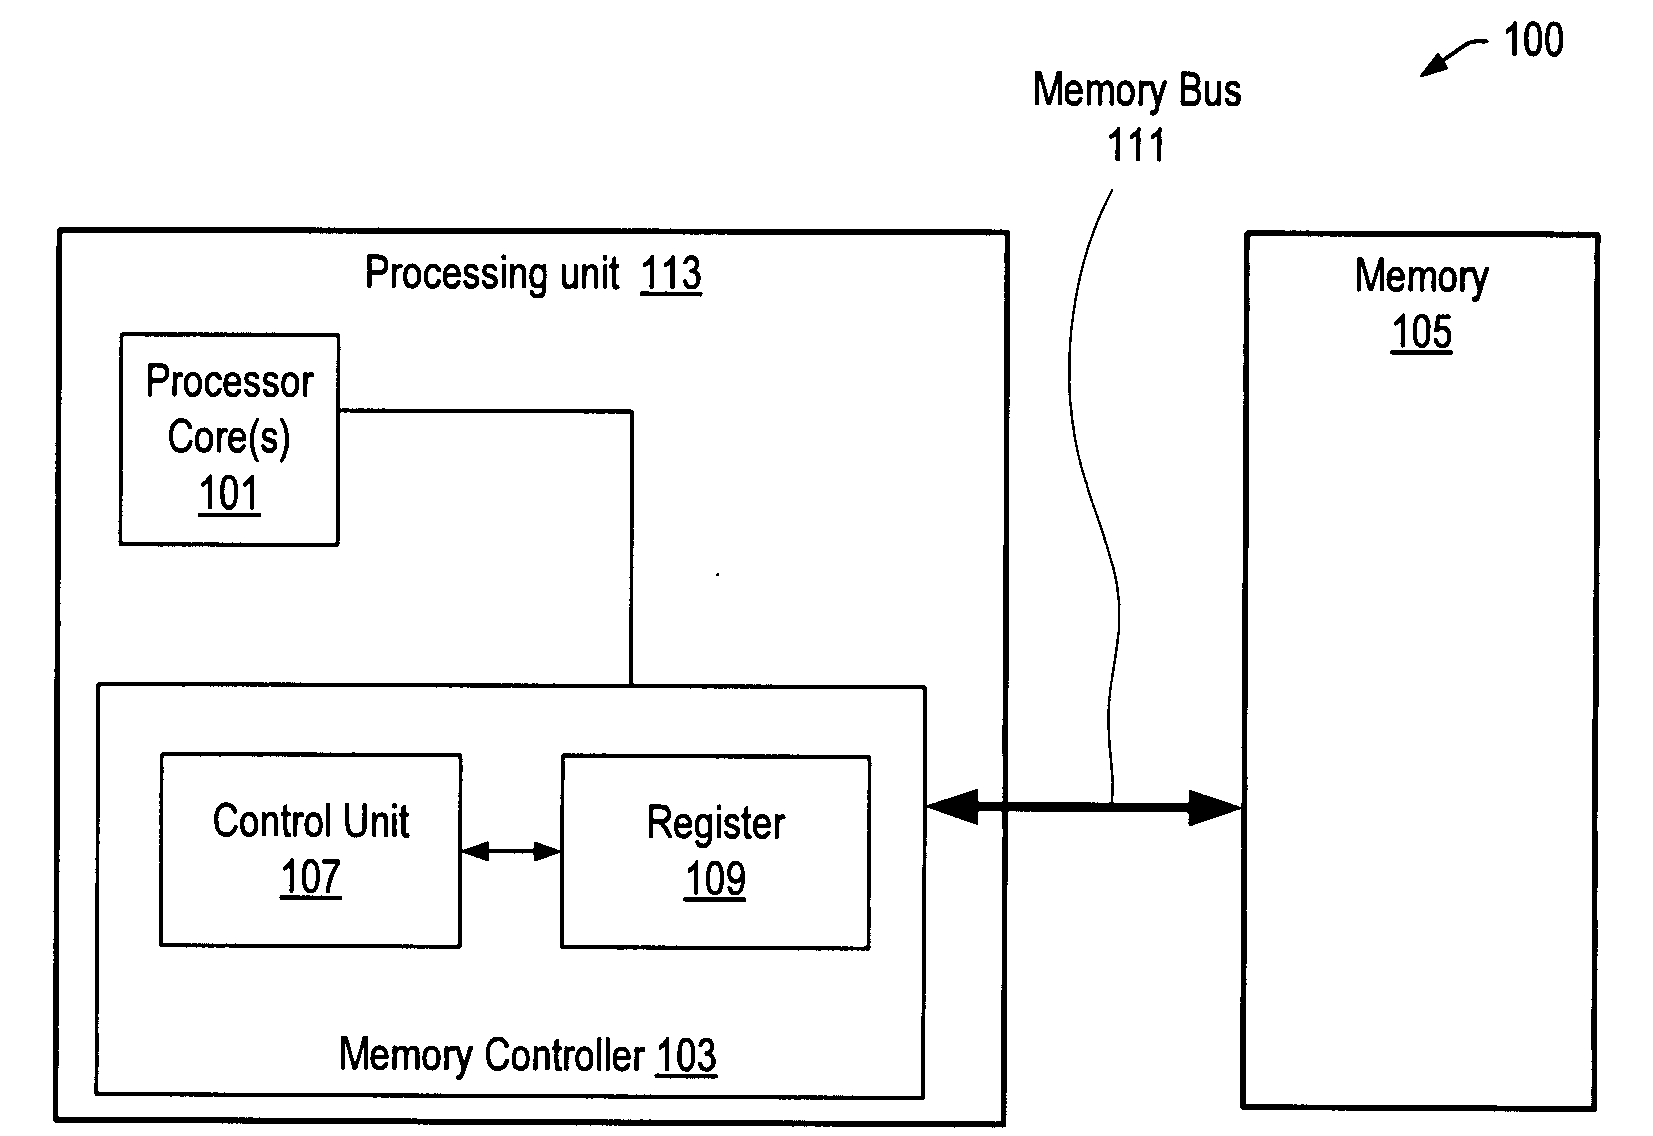 Temperature throttling mechanism for ddr3 memory